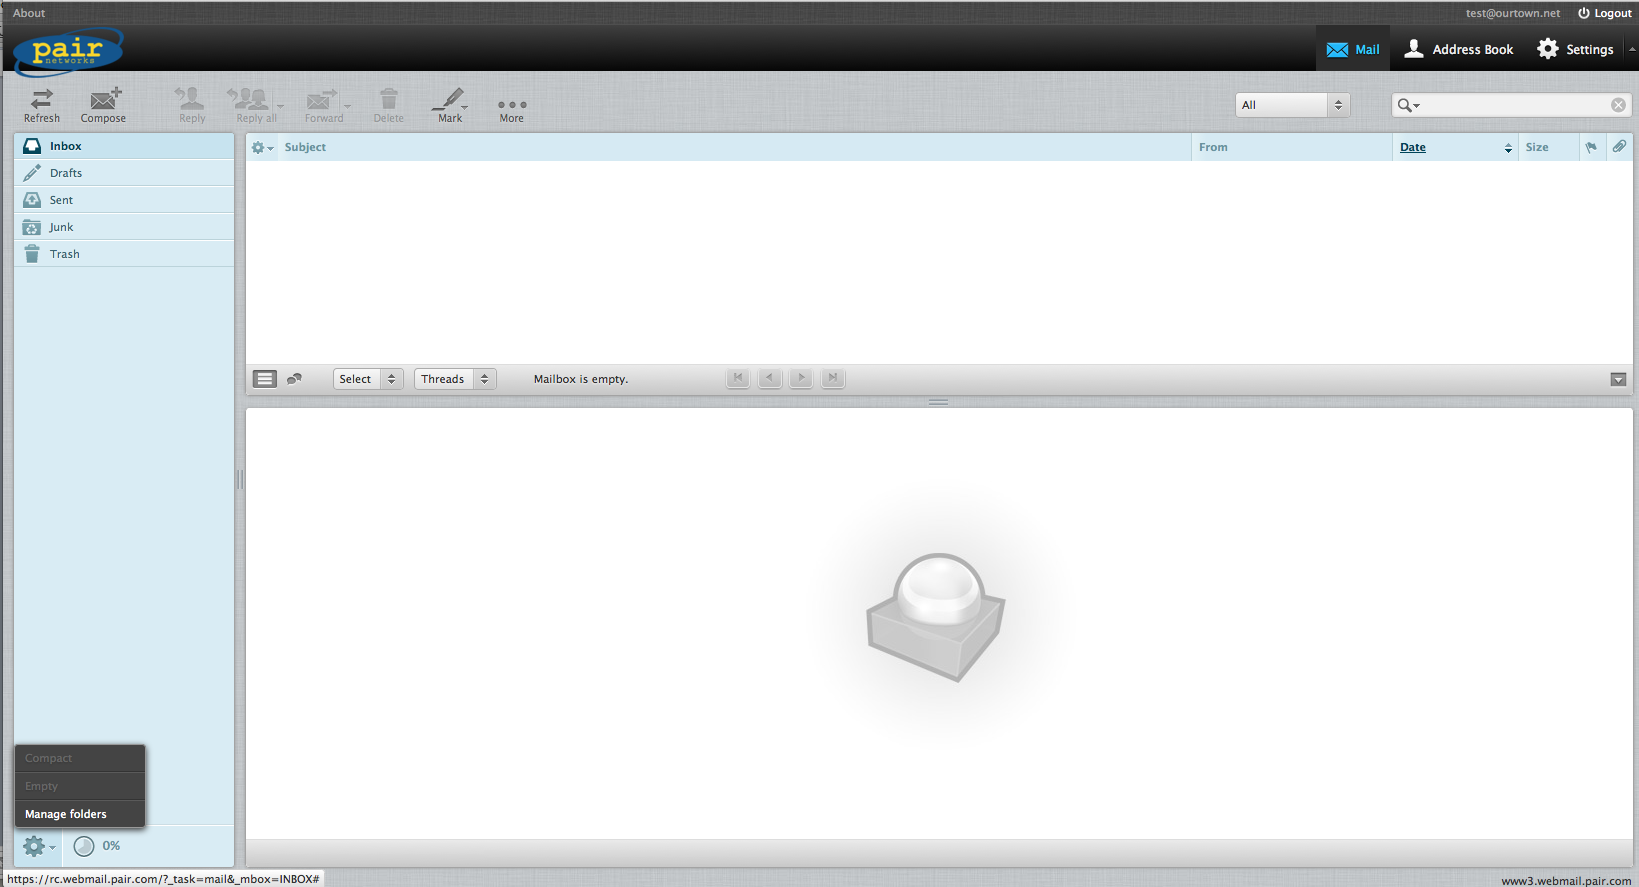 macintosh hd:users:skatefilly:desktop:screen shot 2014-07-24 at 10.48.51 am.png